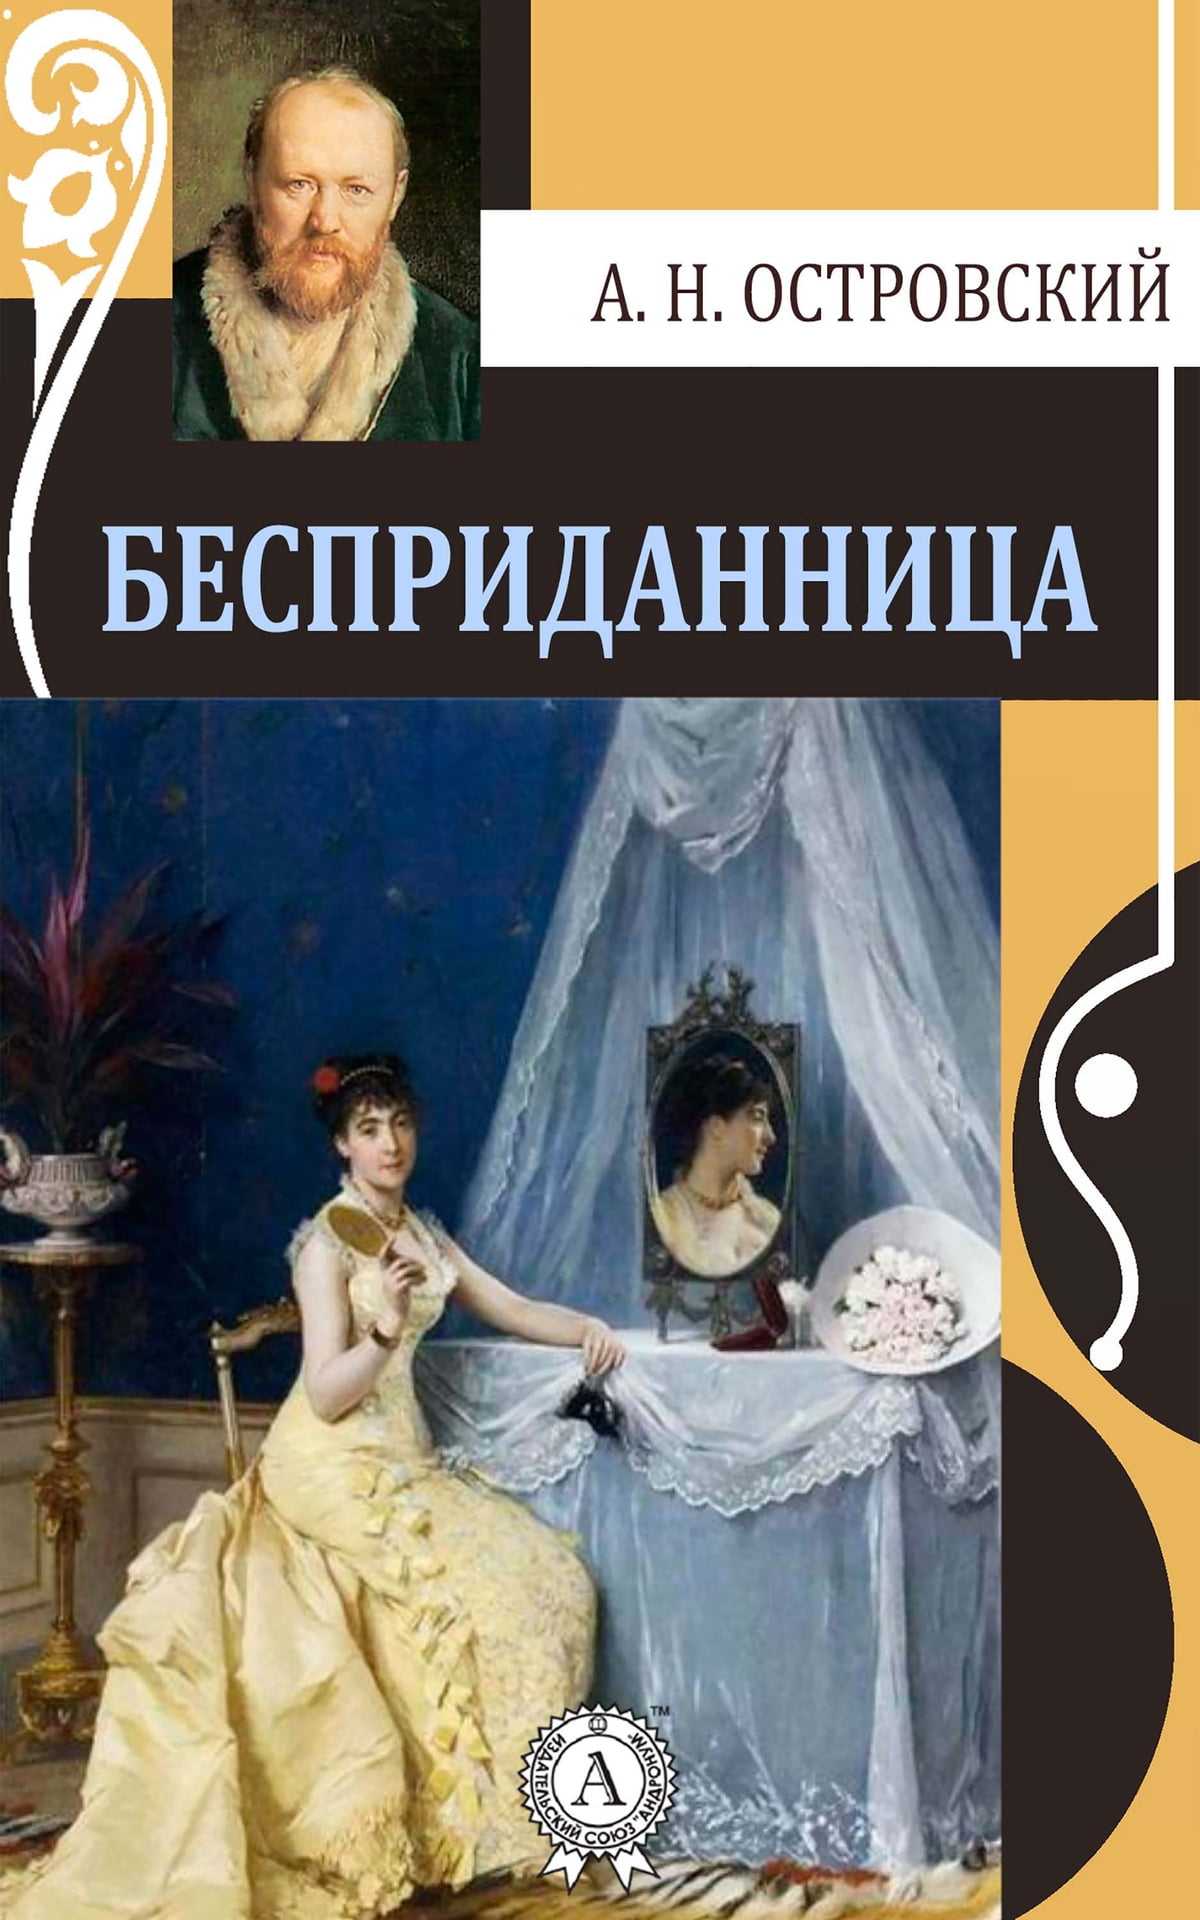 Анализ рассказа чехова «дама с собачкой» :: сочинение по литературе на сочиняшка.ру